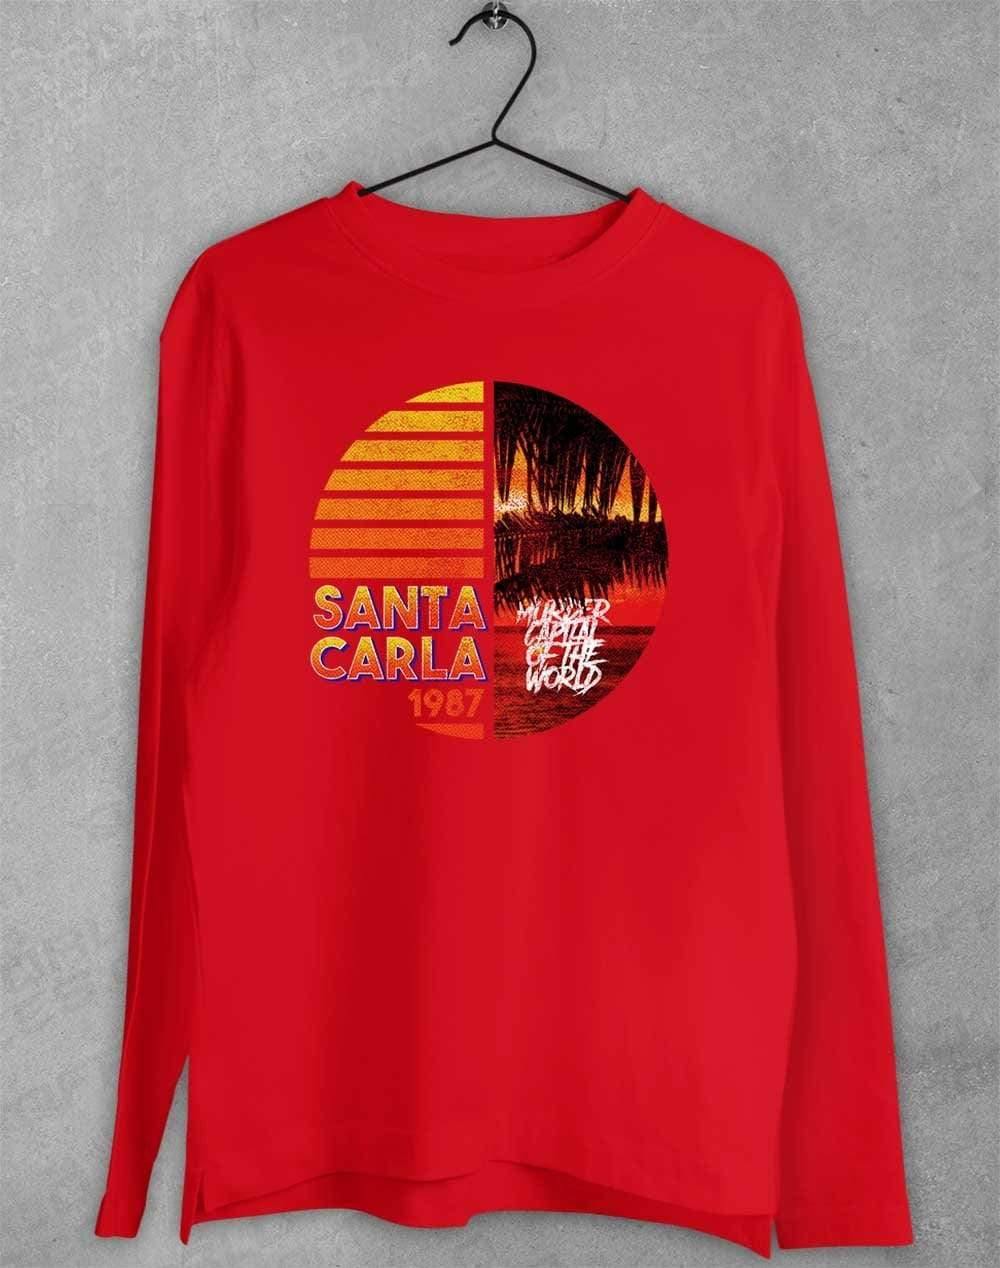 Santa Carla 1987 - Long Sleeve T-Shirt S / Red  - Off World Tees